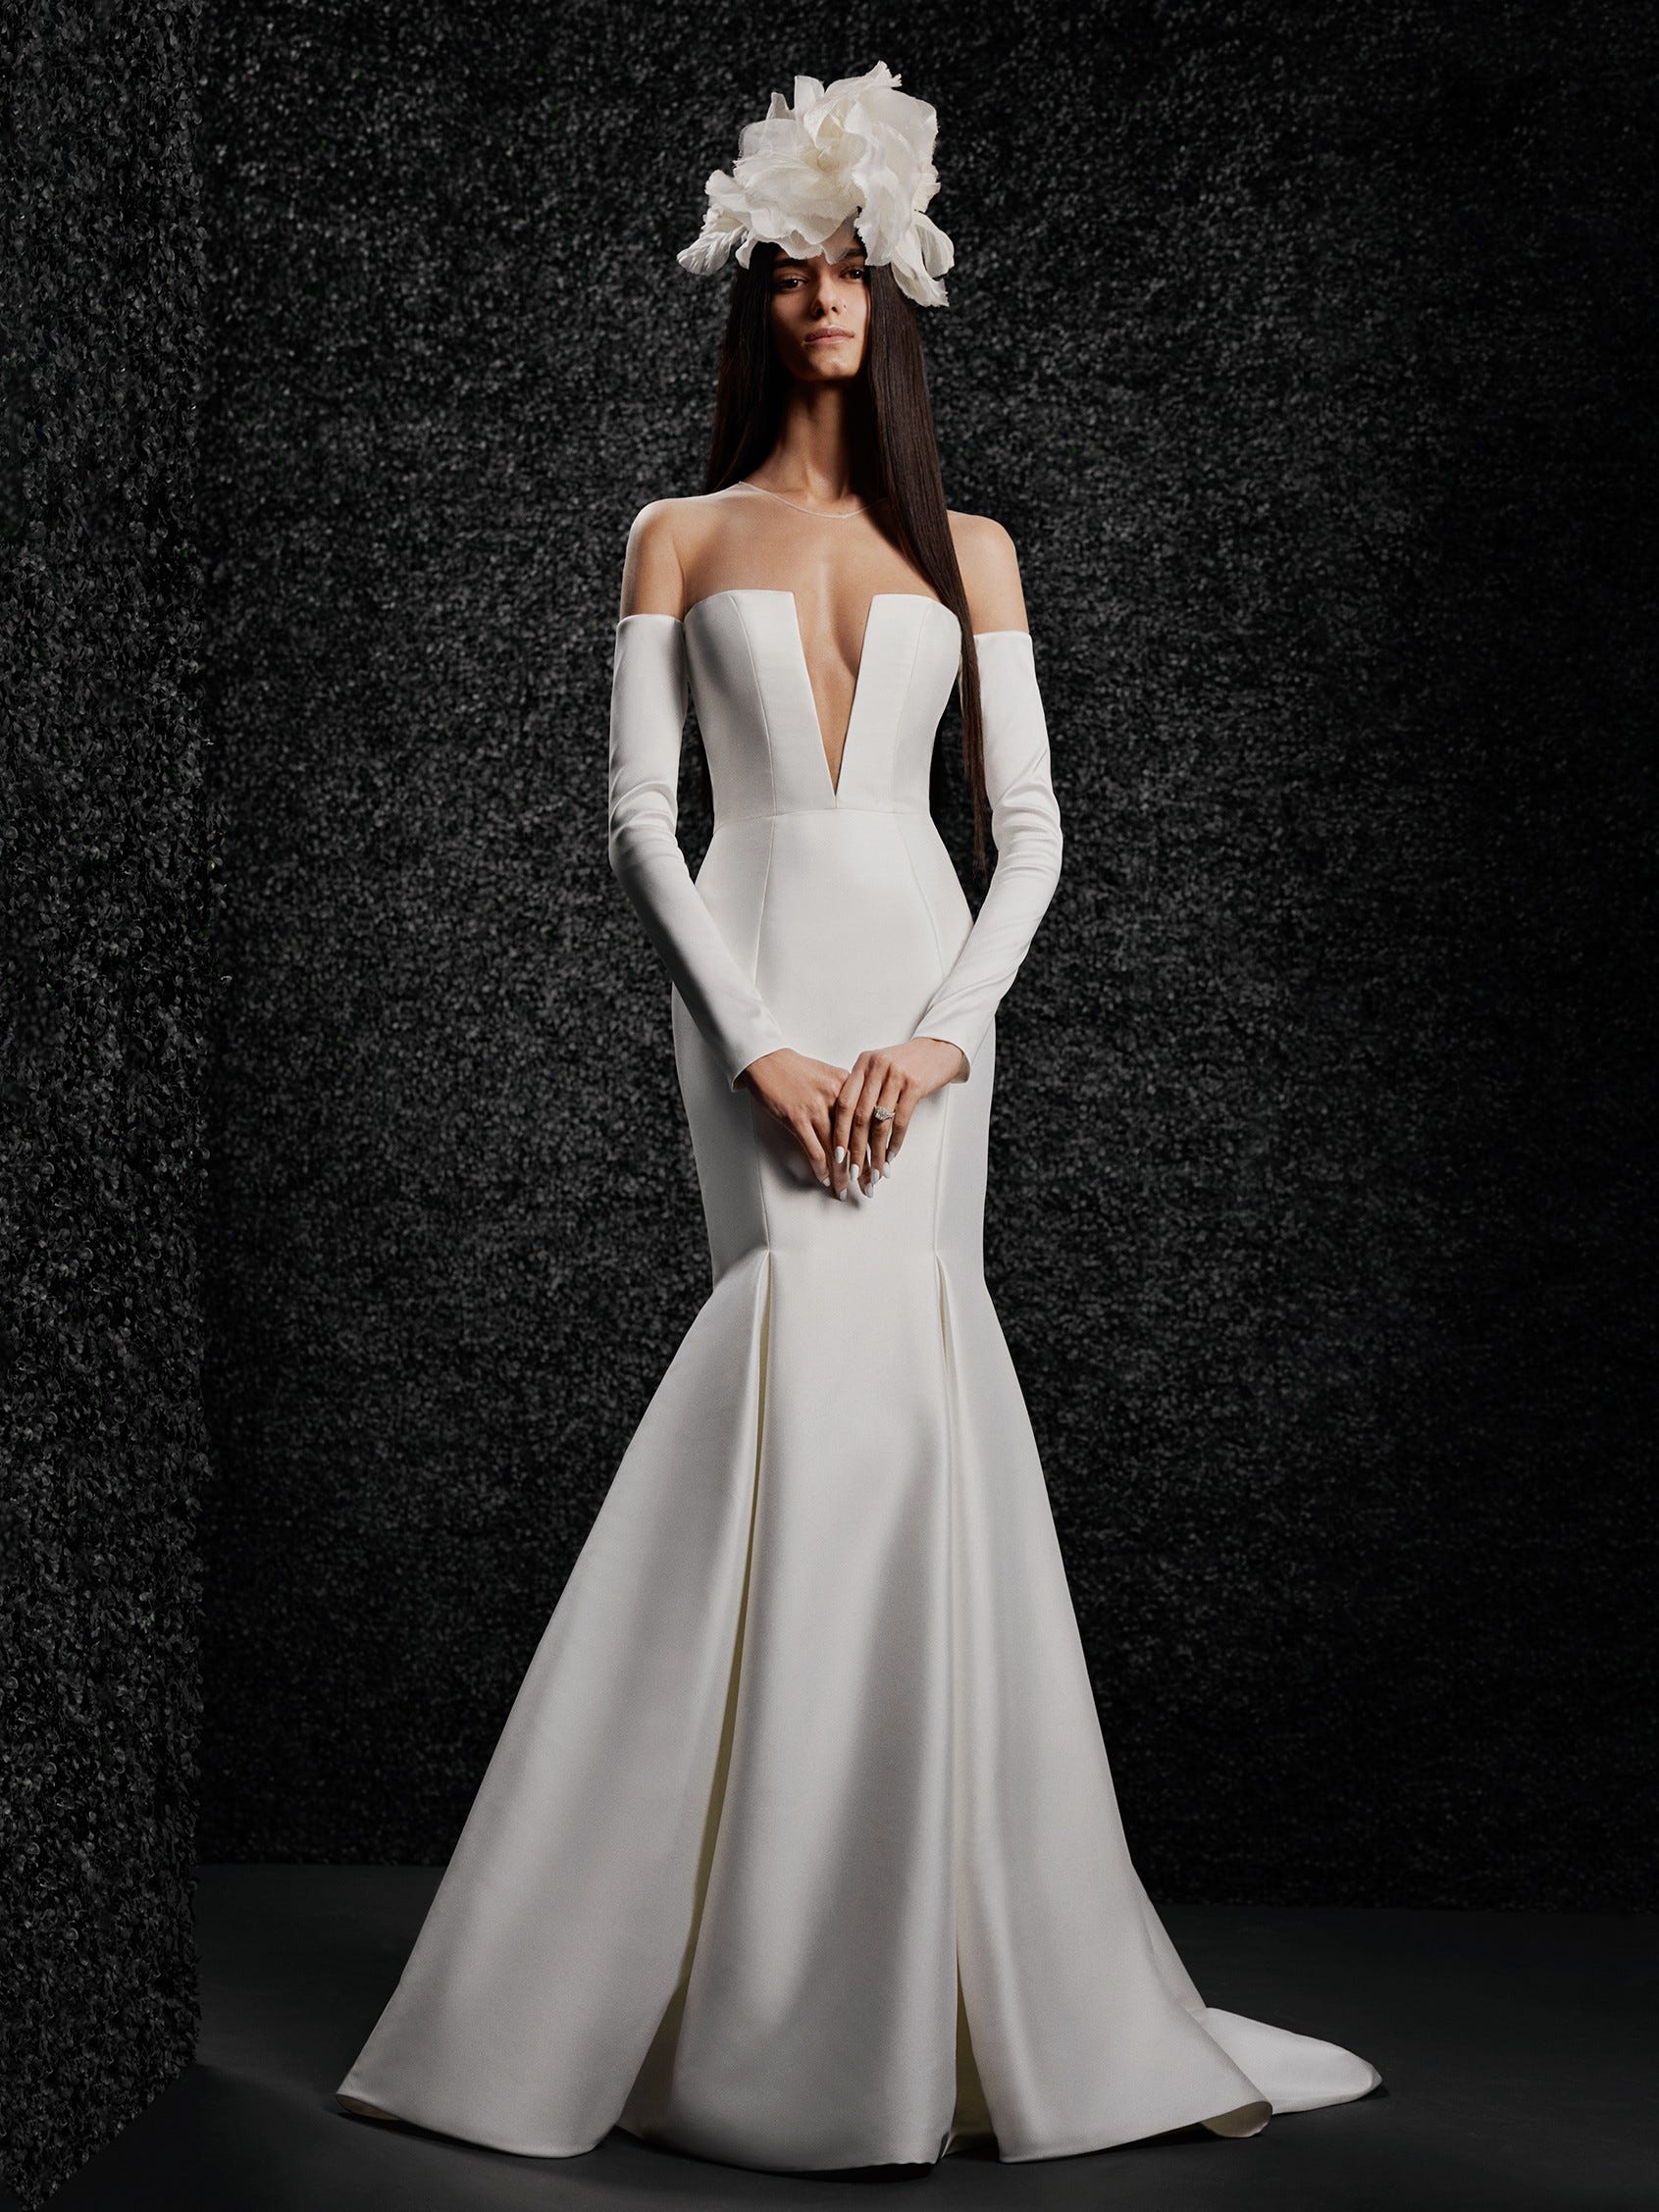 Vera Wang Spring 2019 Wedding Dress Collection | Vera wang bridal, Wedding dresses  vera wang, Strapless wedding gown